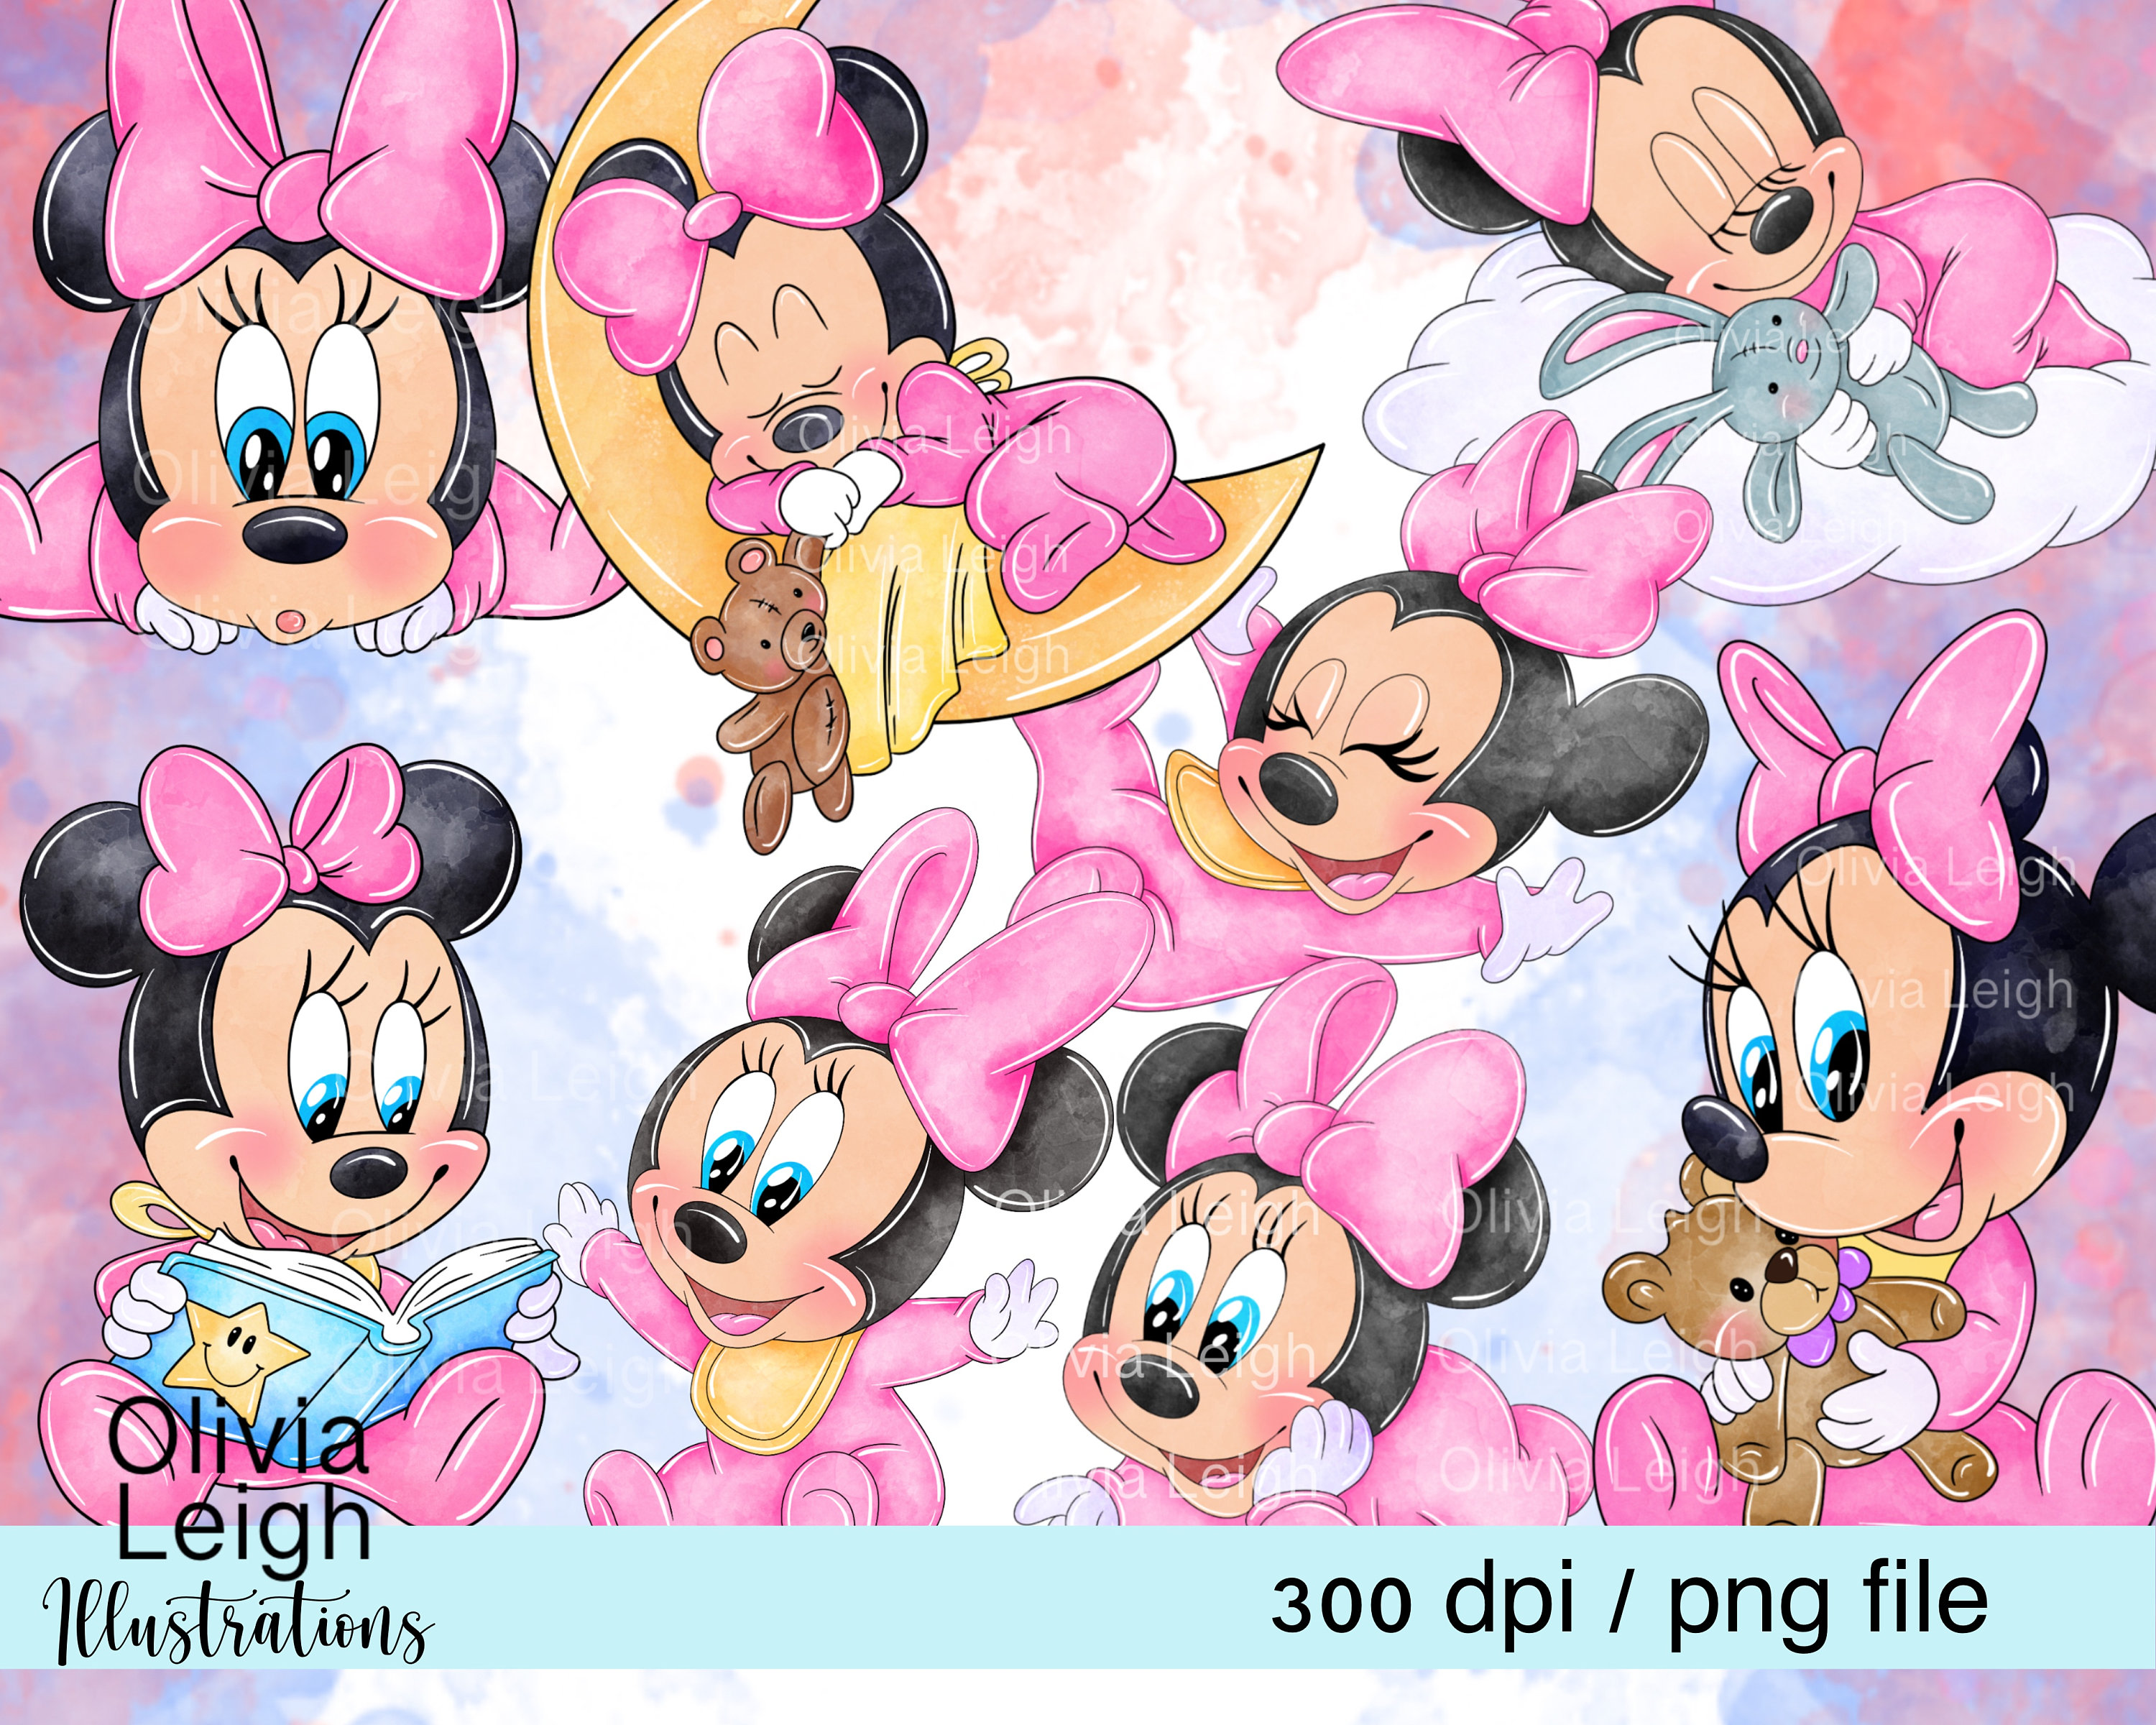 Monogram International Disney Minnie Mouse Mug Autograph Signature 3D Pink